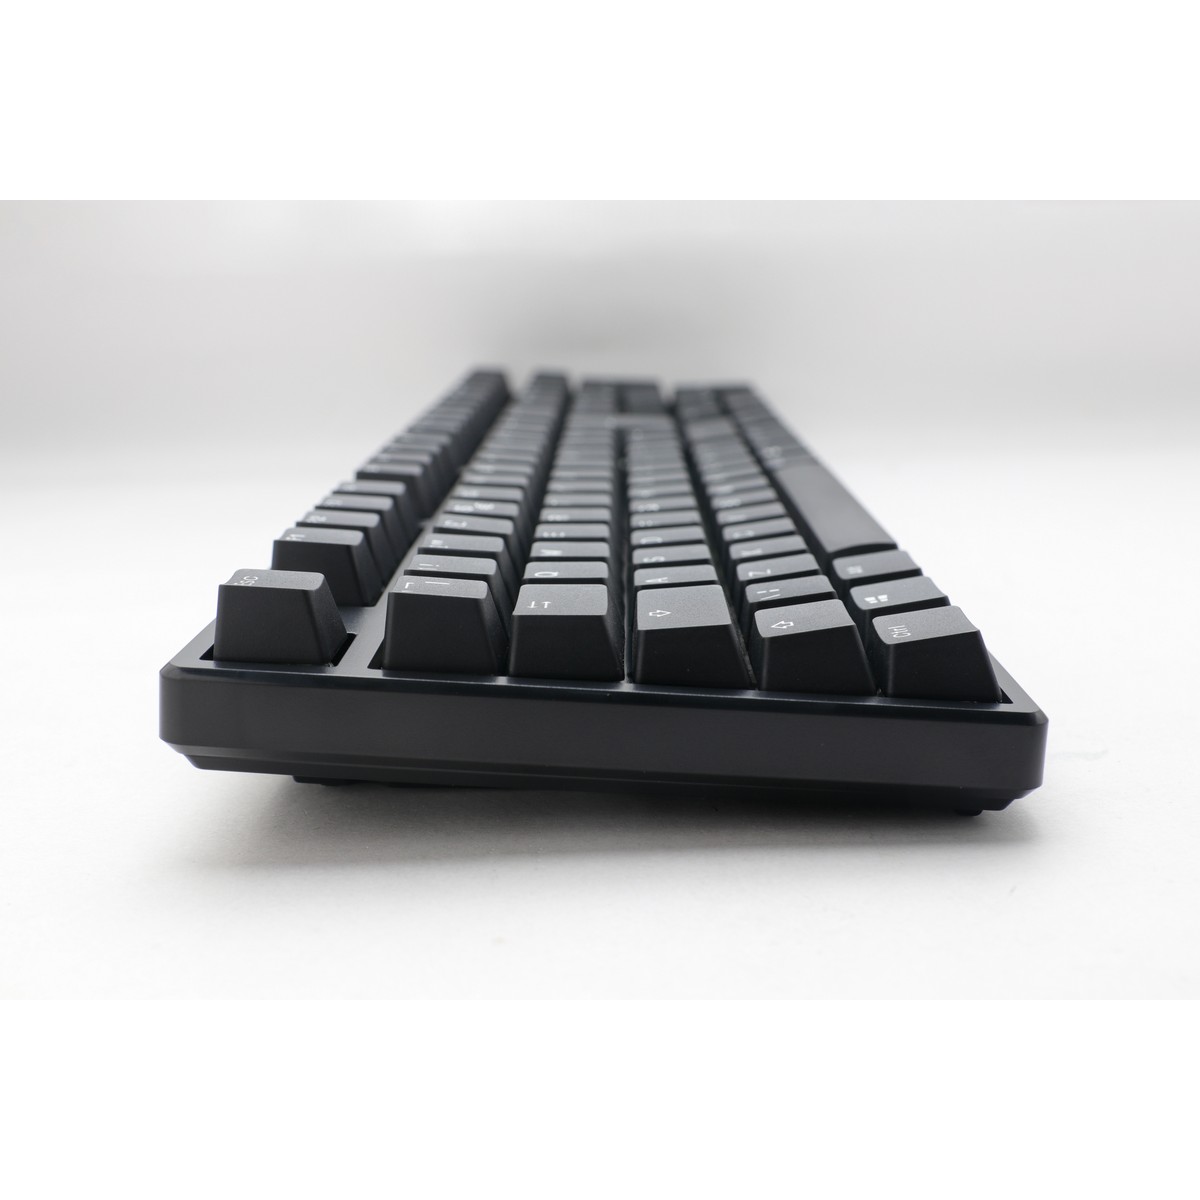 Ducky - Ducky Origin USB Mechanical Gaming Keyboard Cherry MX Brown - Black UK Layout